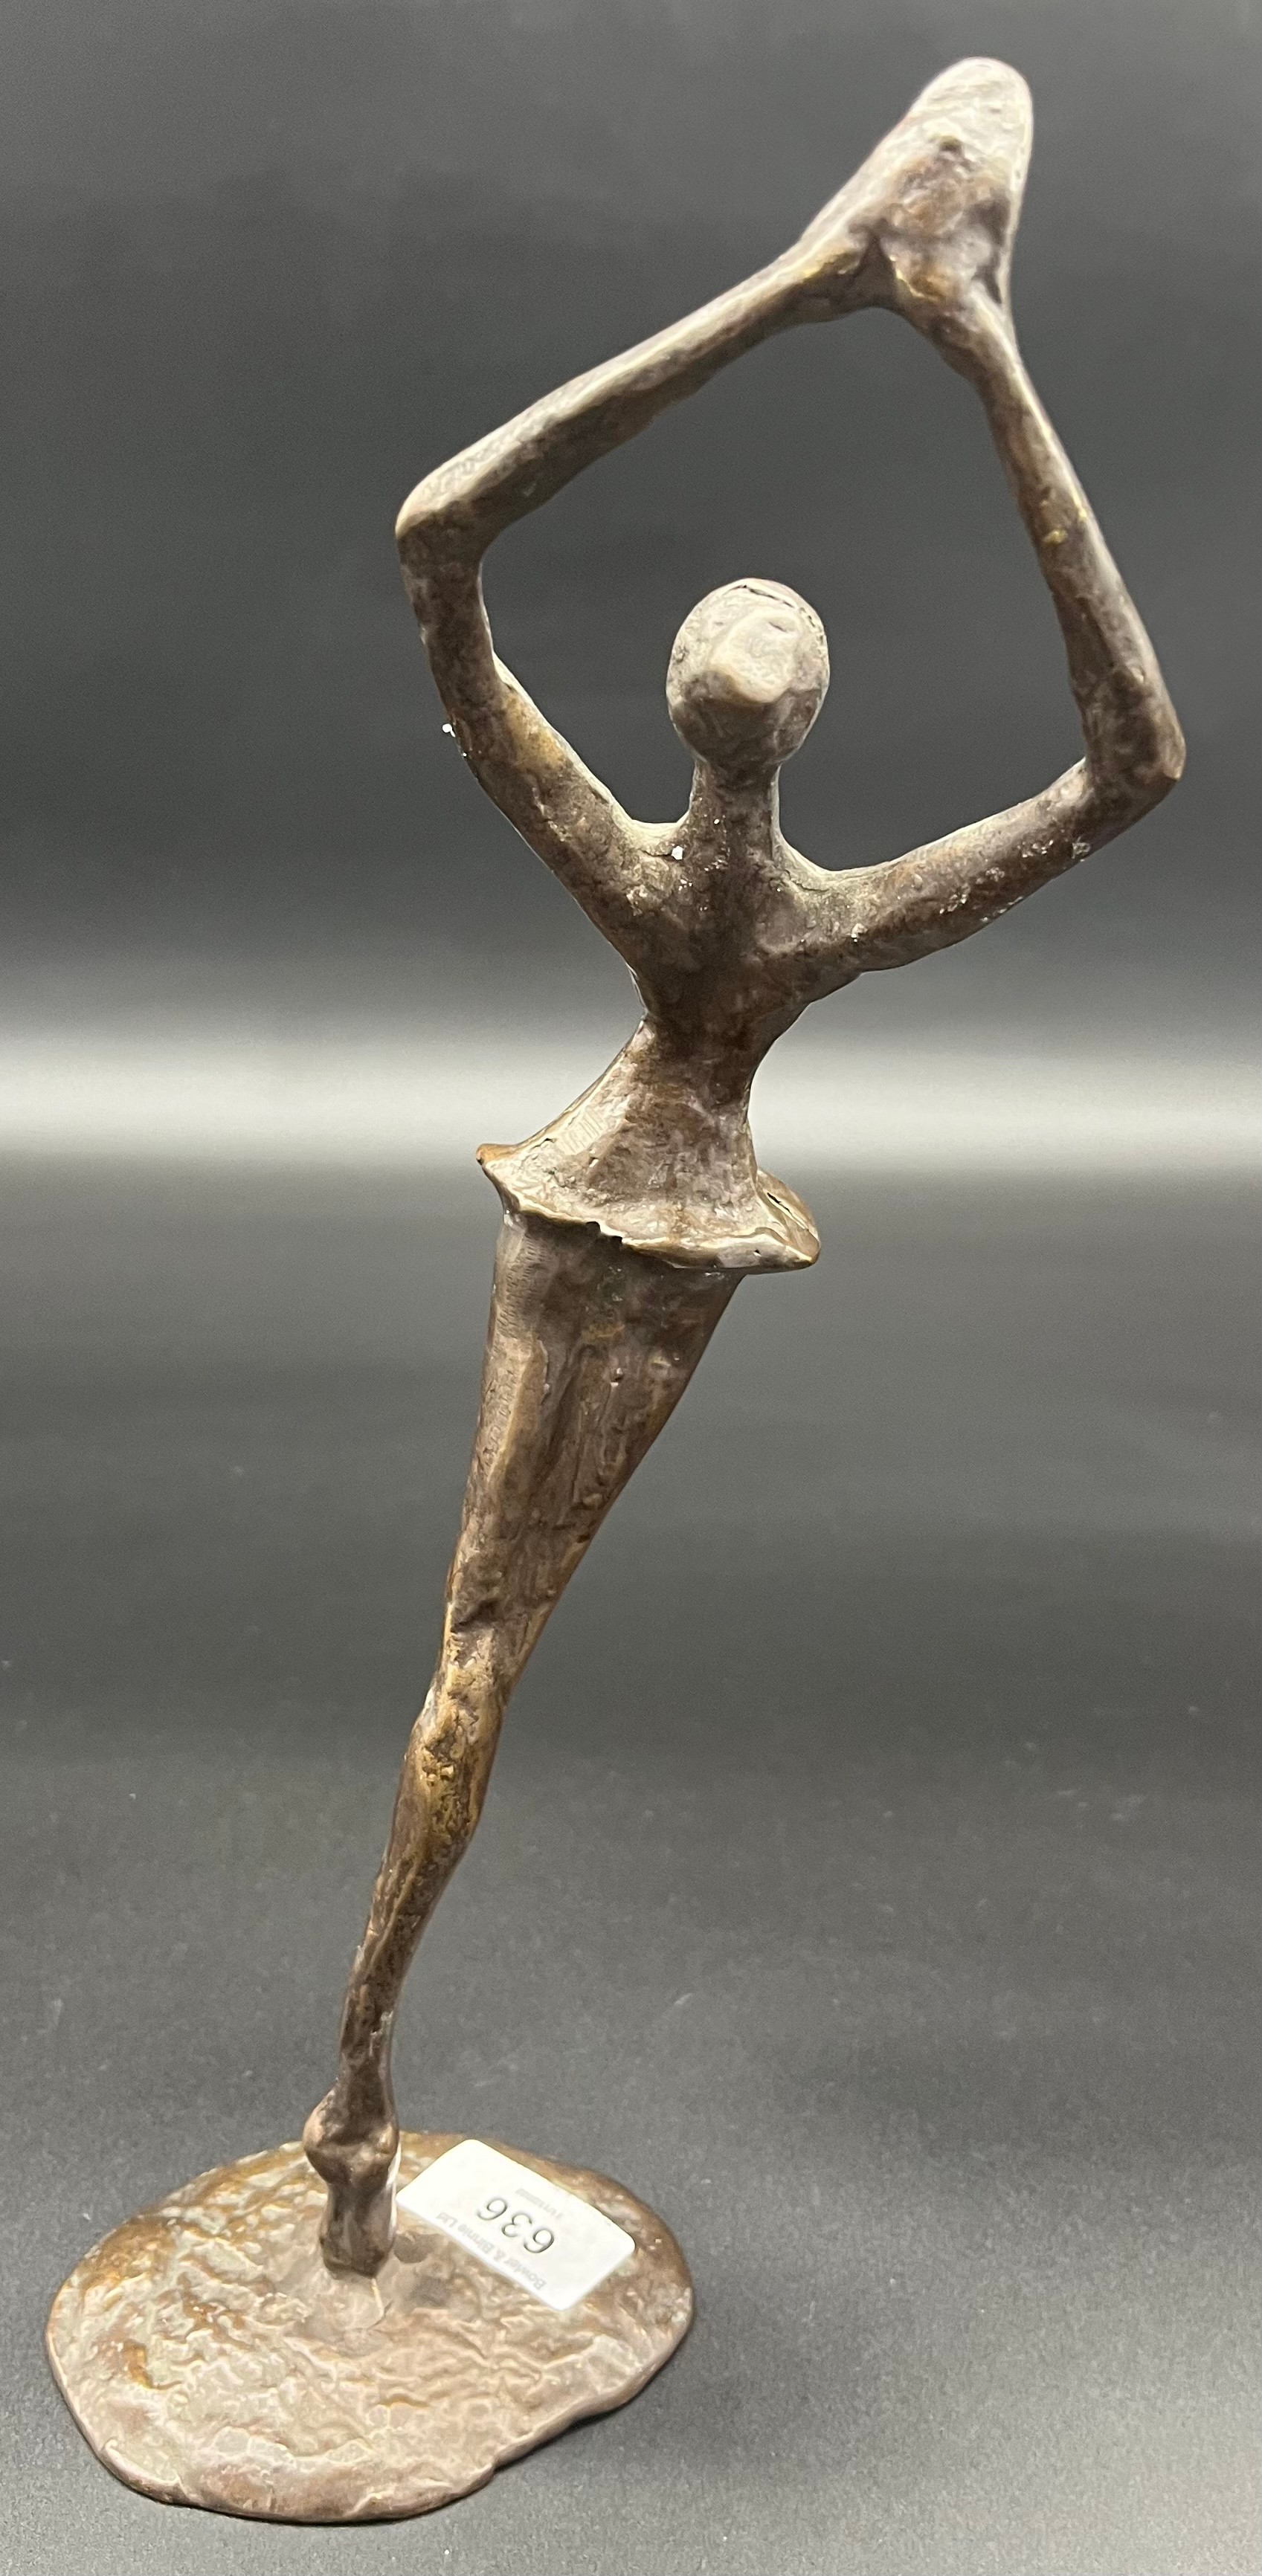 Contemporary solid bronze ballerina figurine sculpture. [35cm high] - Image 2 of 3